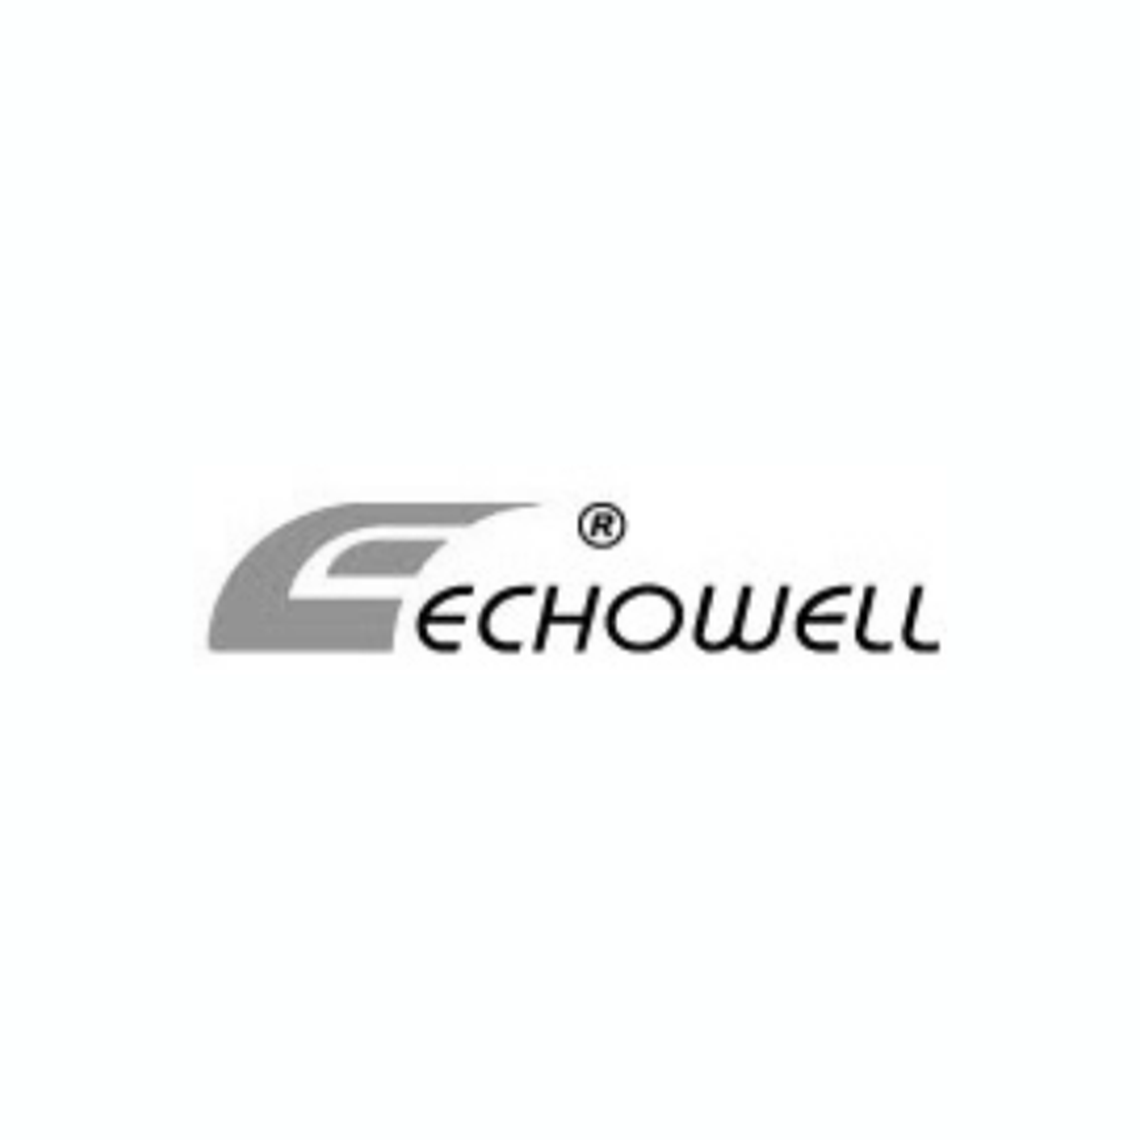 Echowell